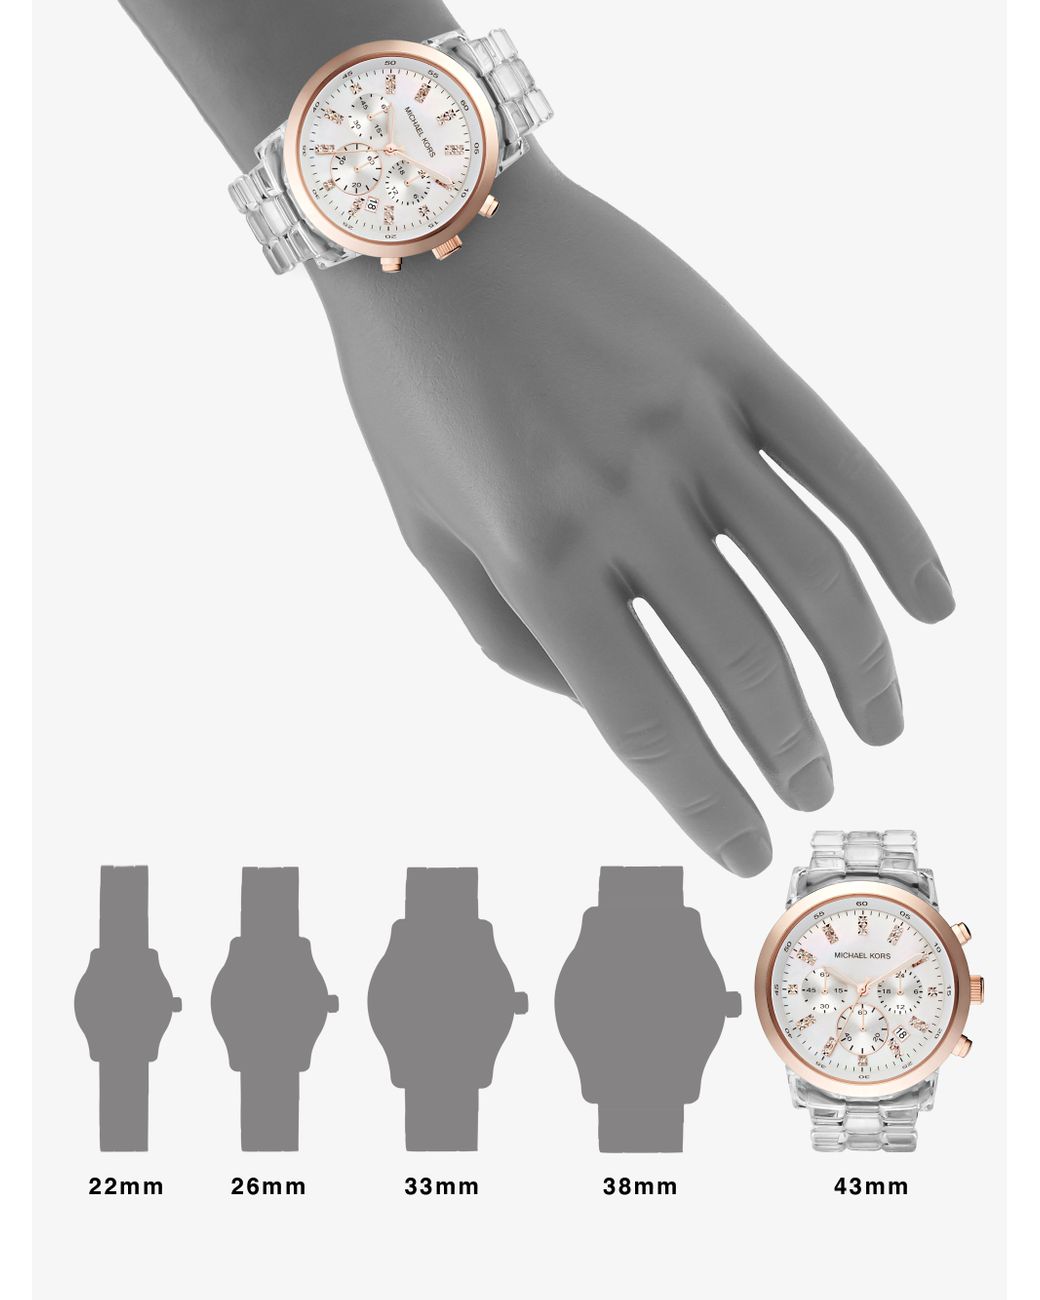 Michael Kors Clear Bracelet Chronograph Watch in Metallic | Lyst